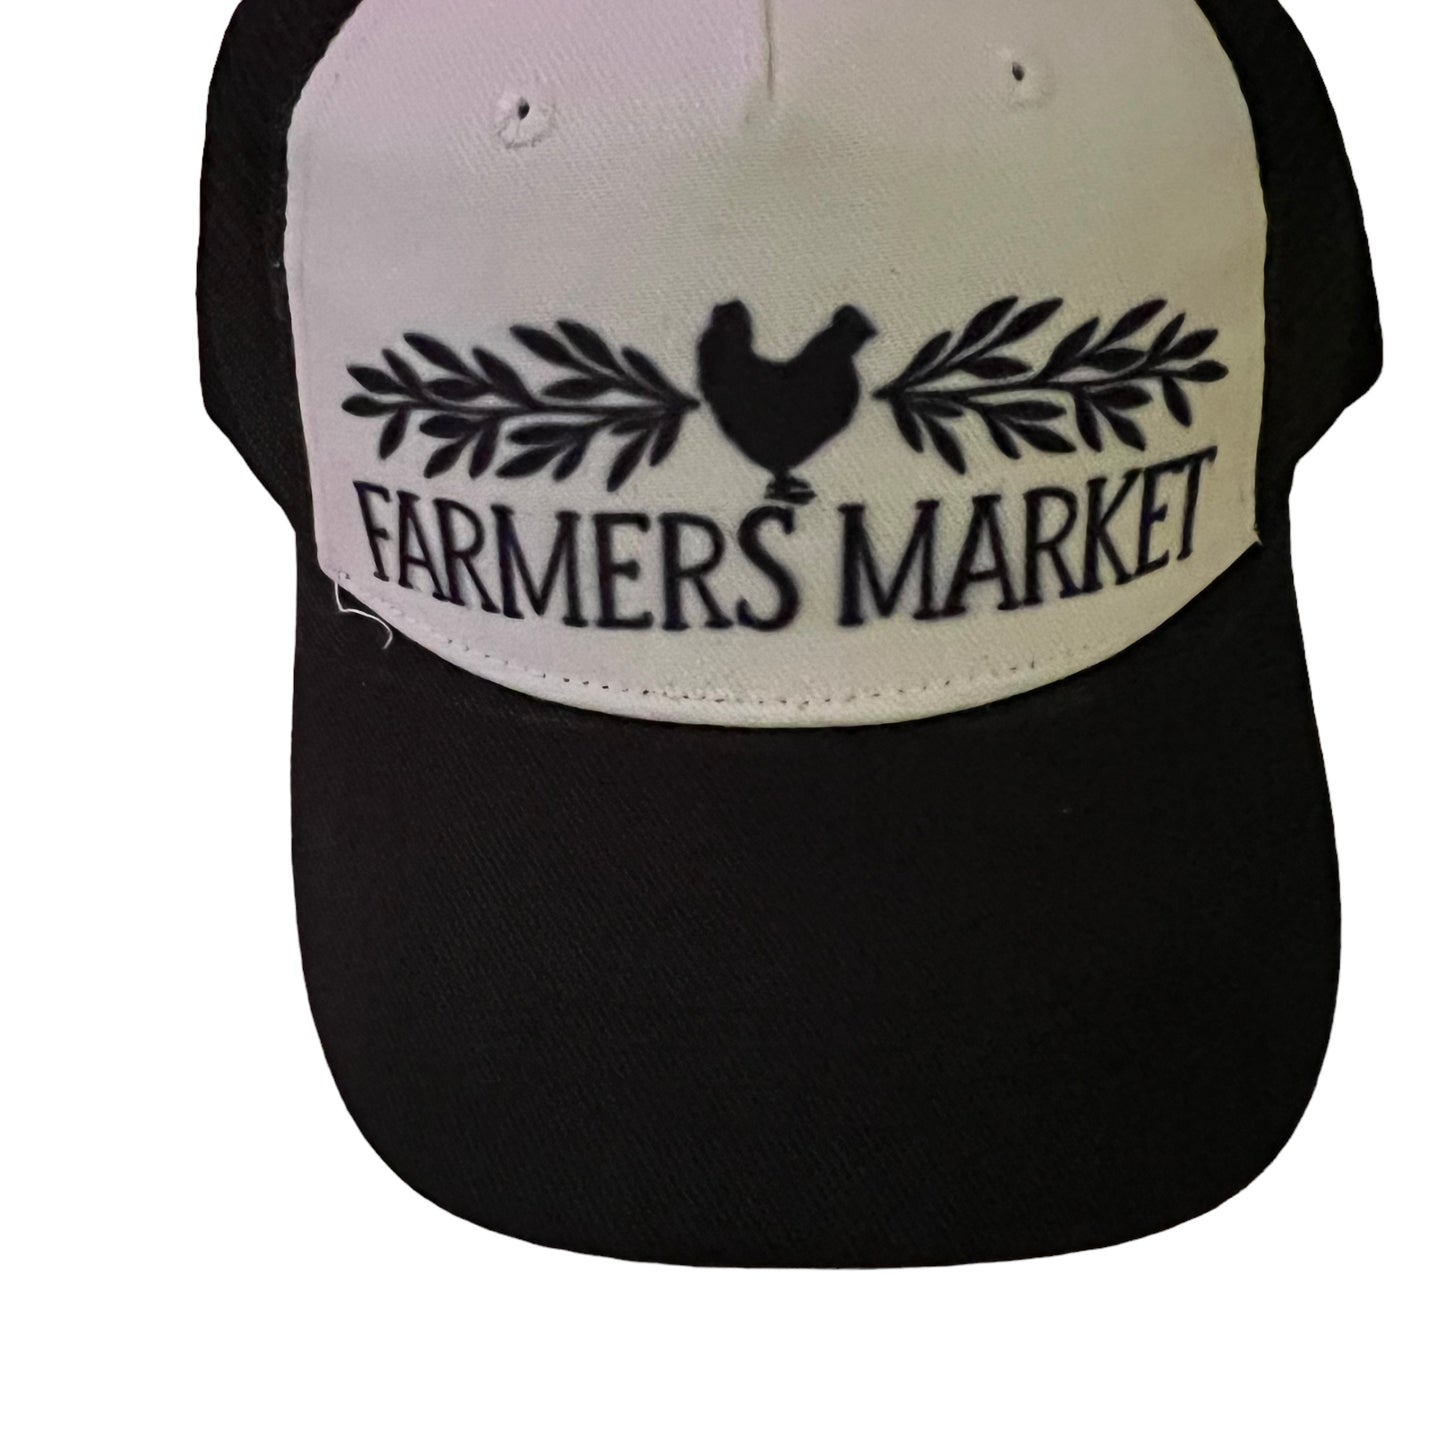 JenDore Farmer's Market Black White Trucker Hat Cap